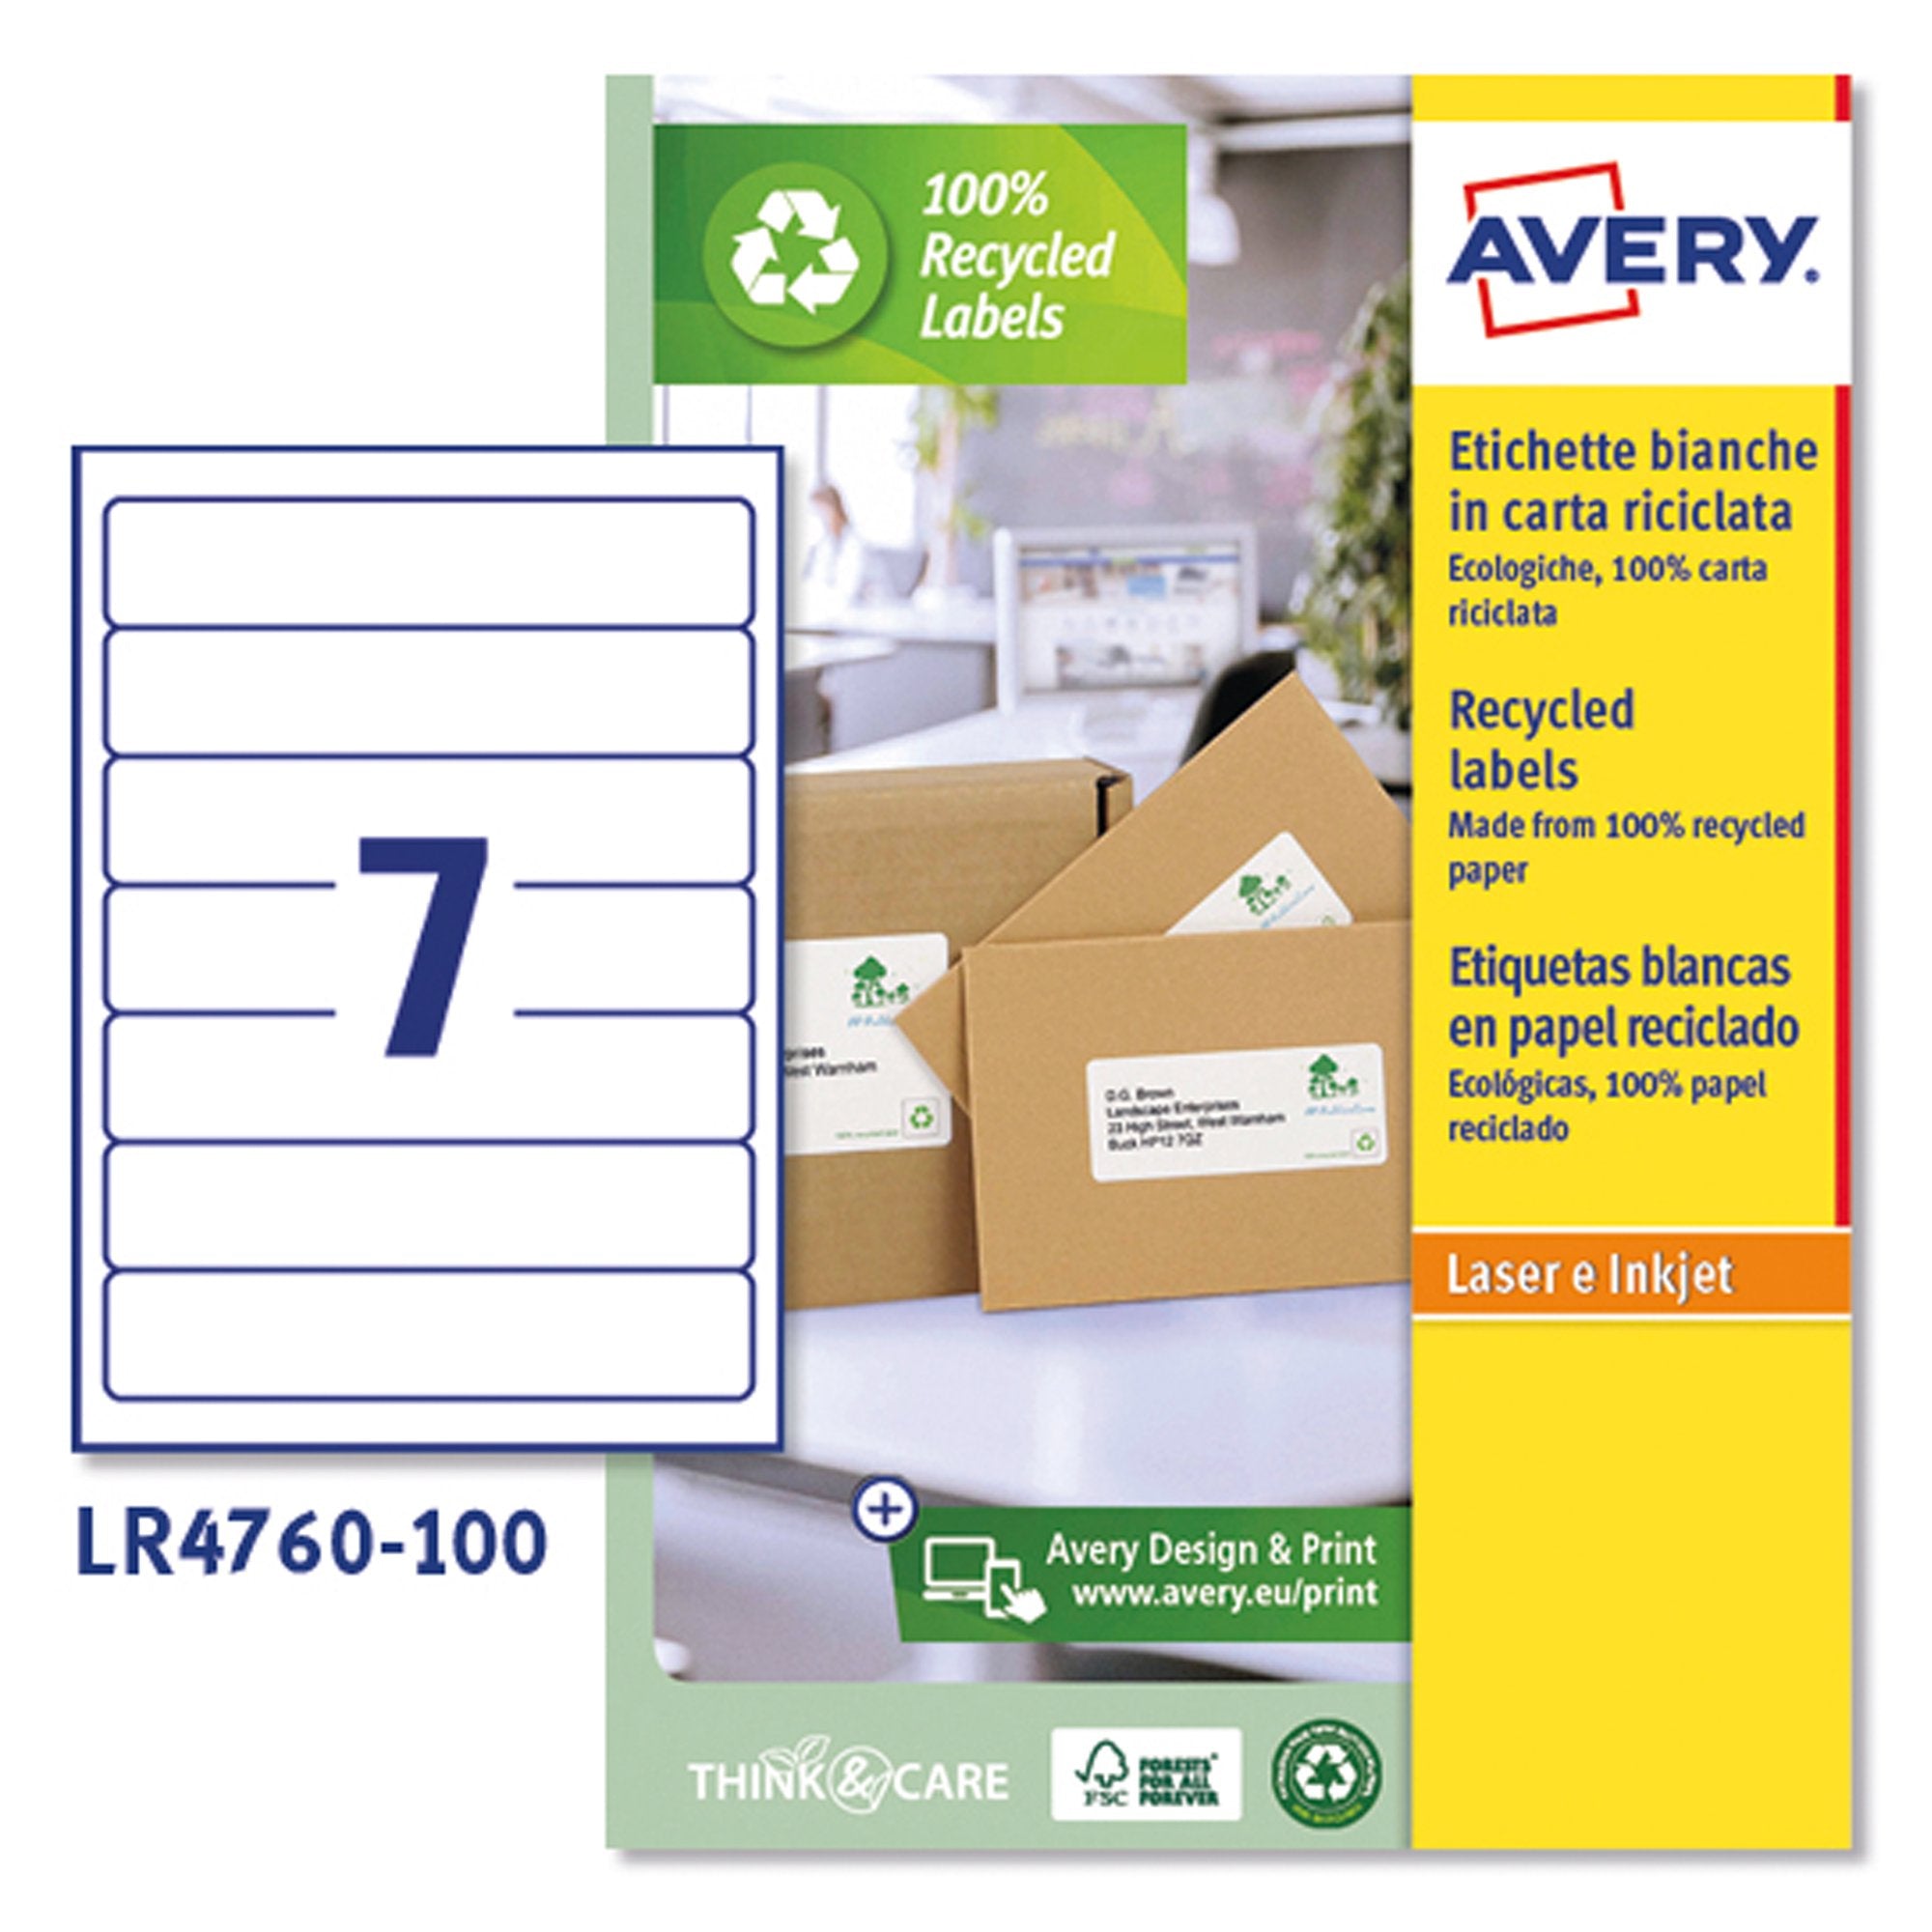 avery-etichette-carta-riciclata-bianca-raccoglitori-38x192mm-7et-fg-laser-